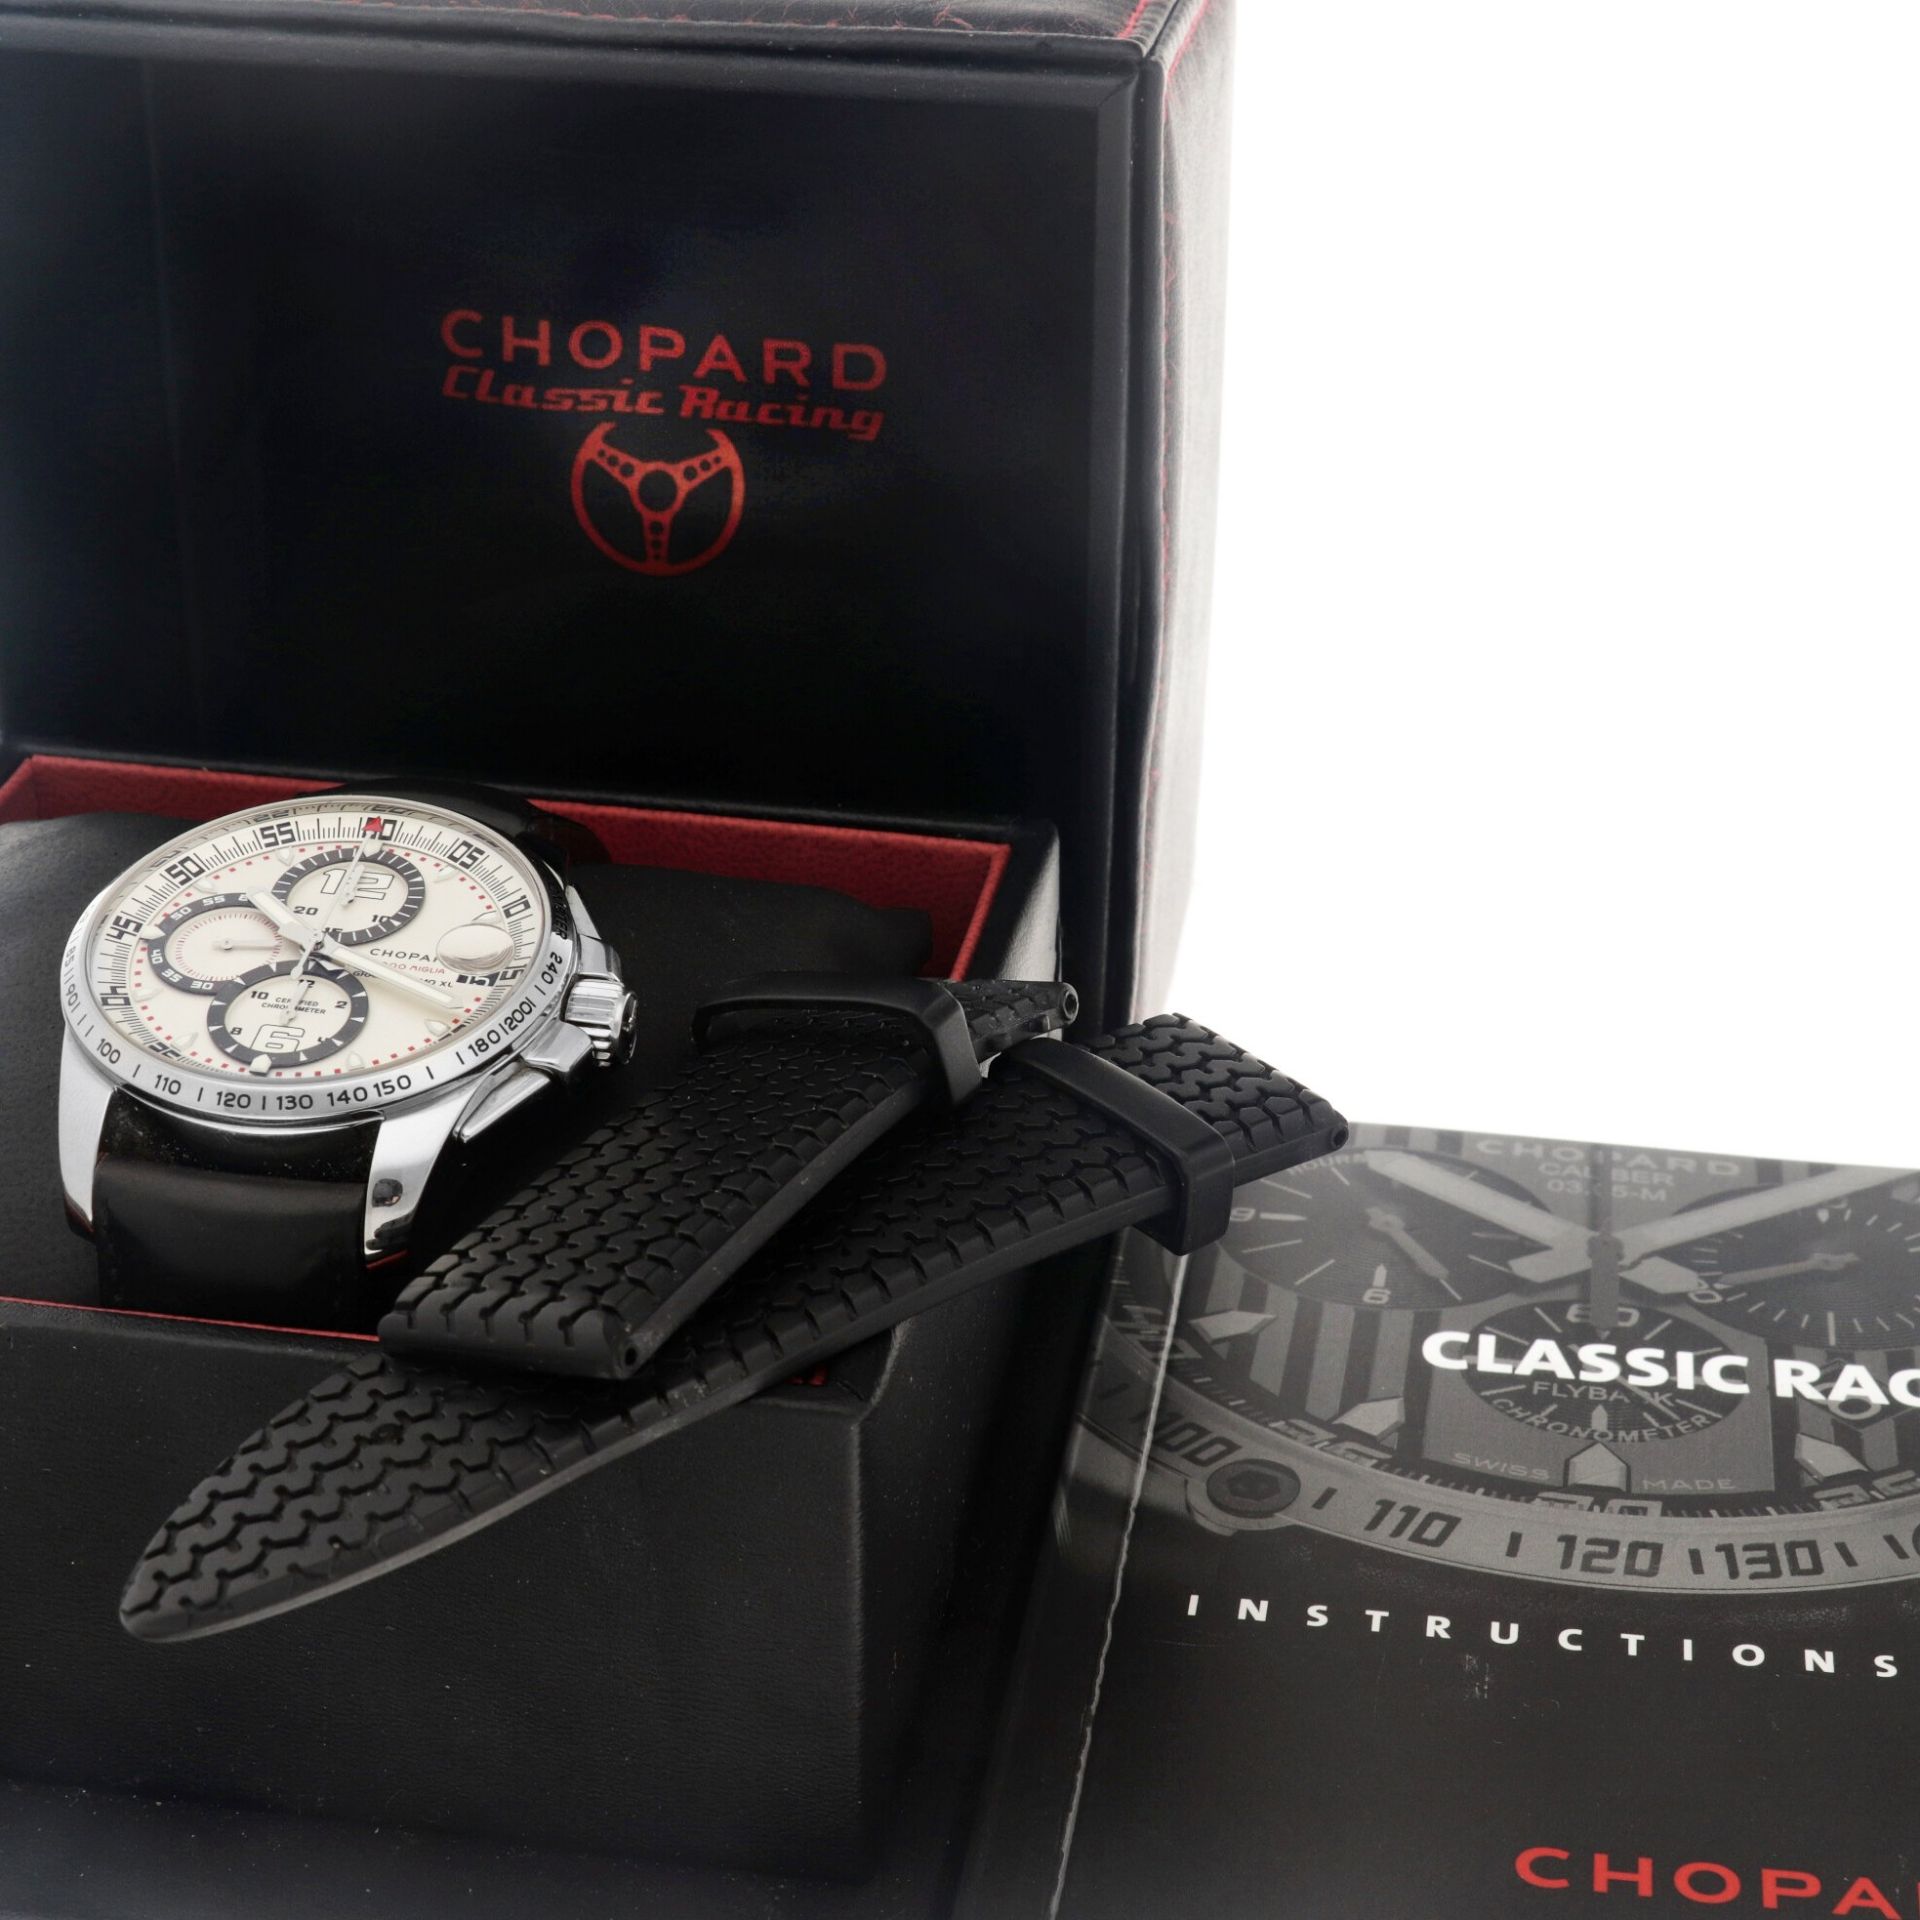 Chopard Mille Miglia Gran Turismo XL 8459 - Men's watch - 2014. - Image 6 of 6